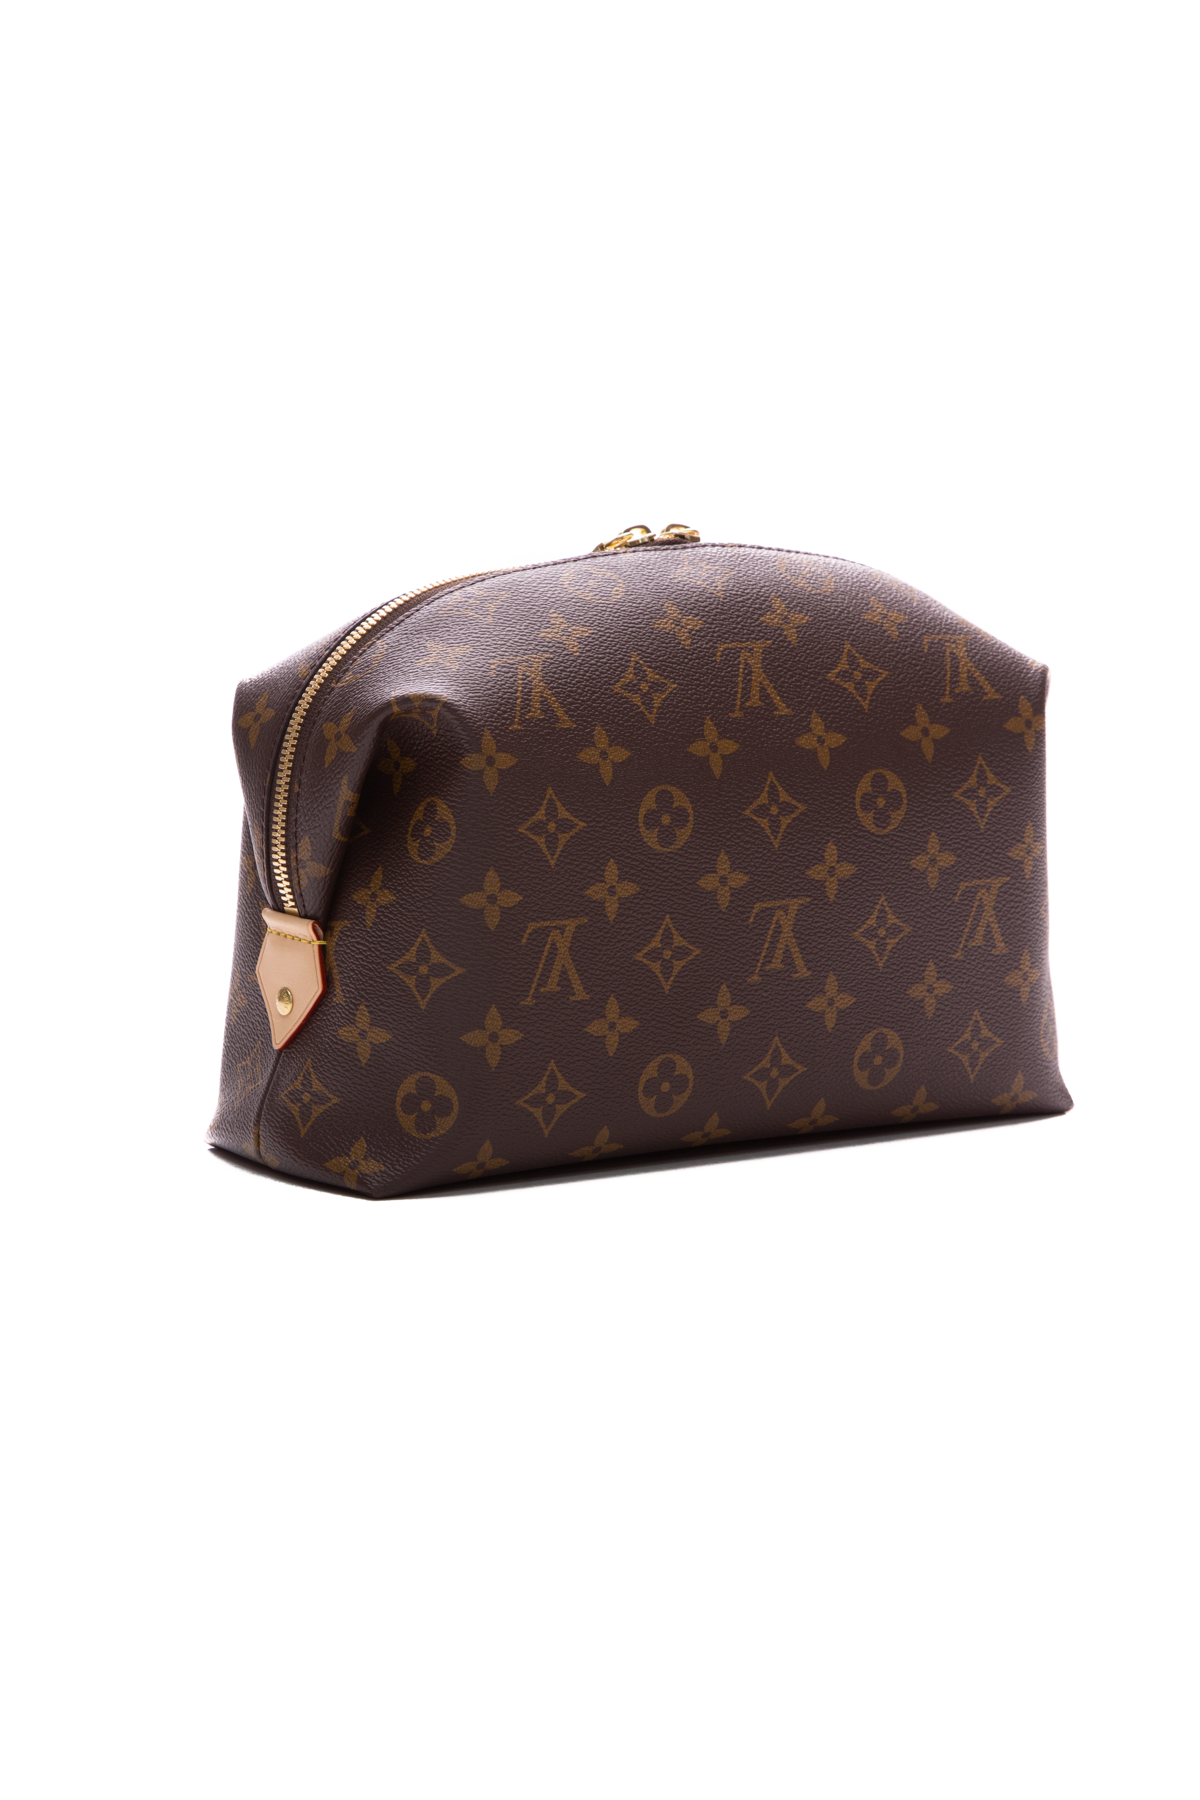 Louis Vuitton Monogram Cosmetic Bag